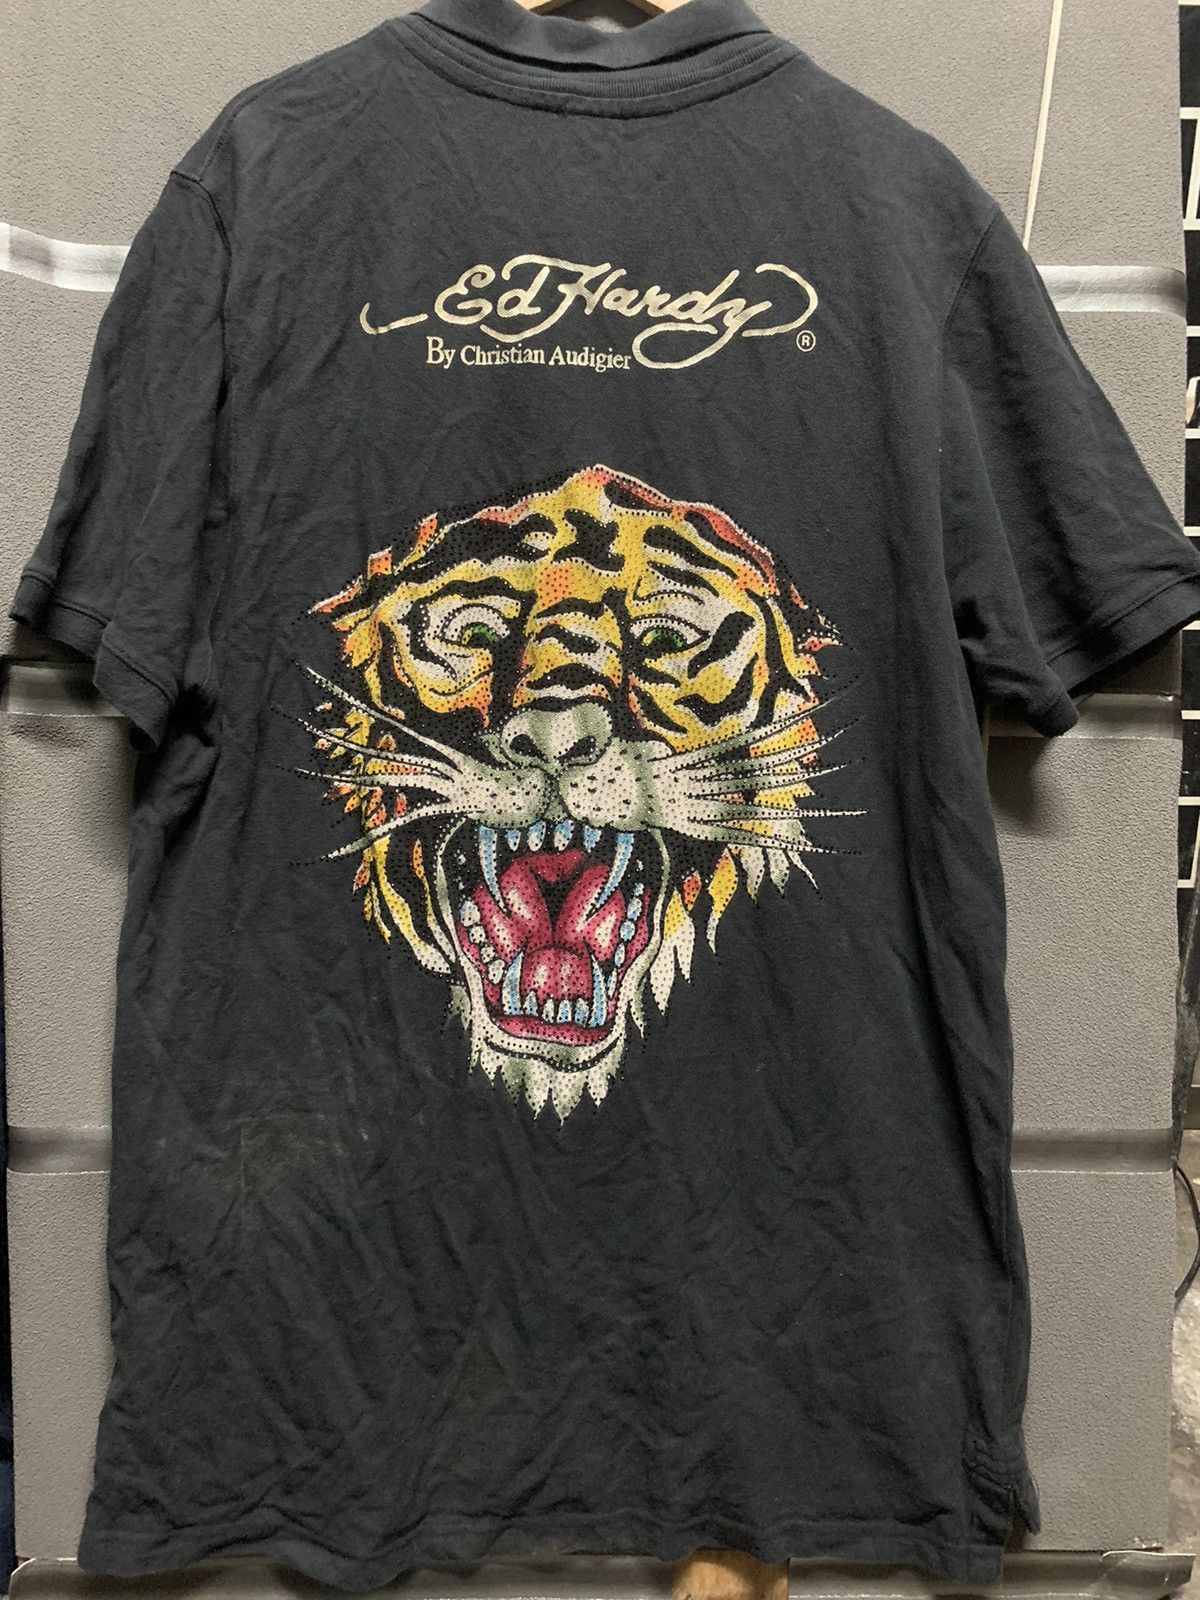 Christian Audigier - Ed Hardy Diamond Tiger Polo shirt - 5